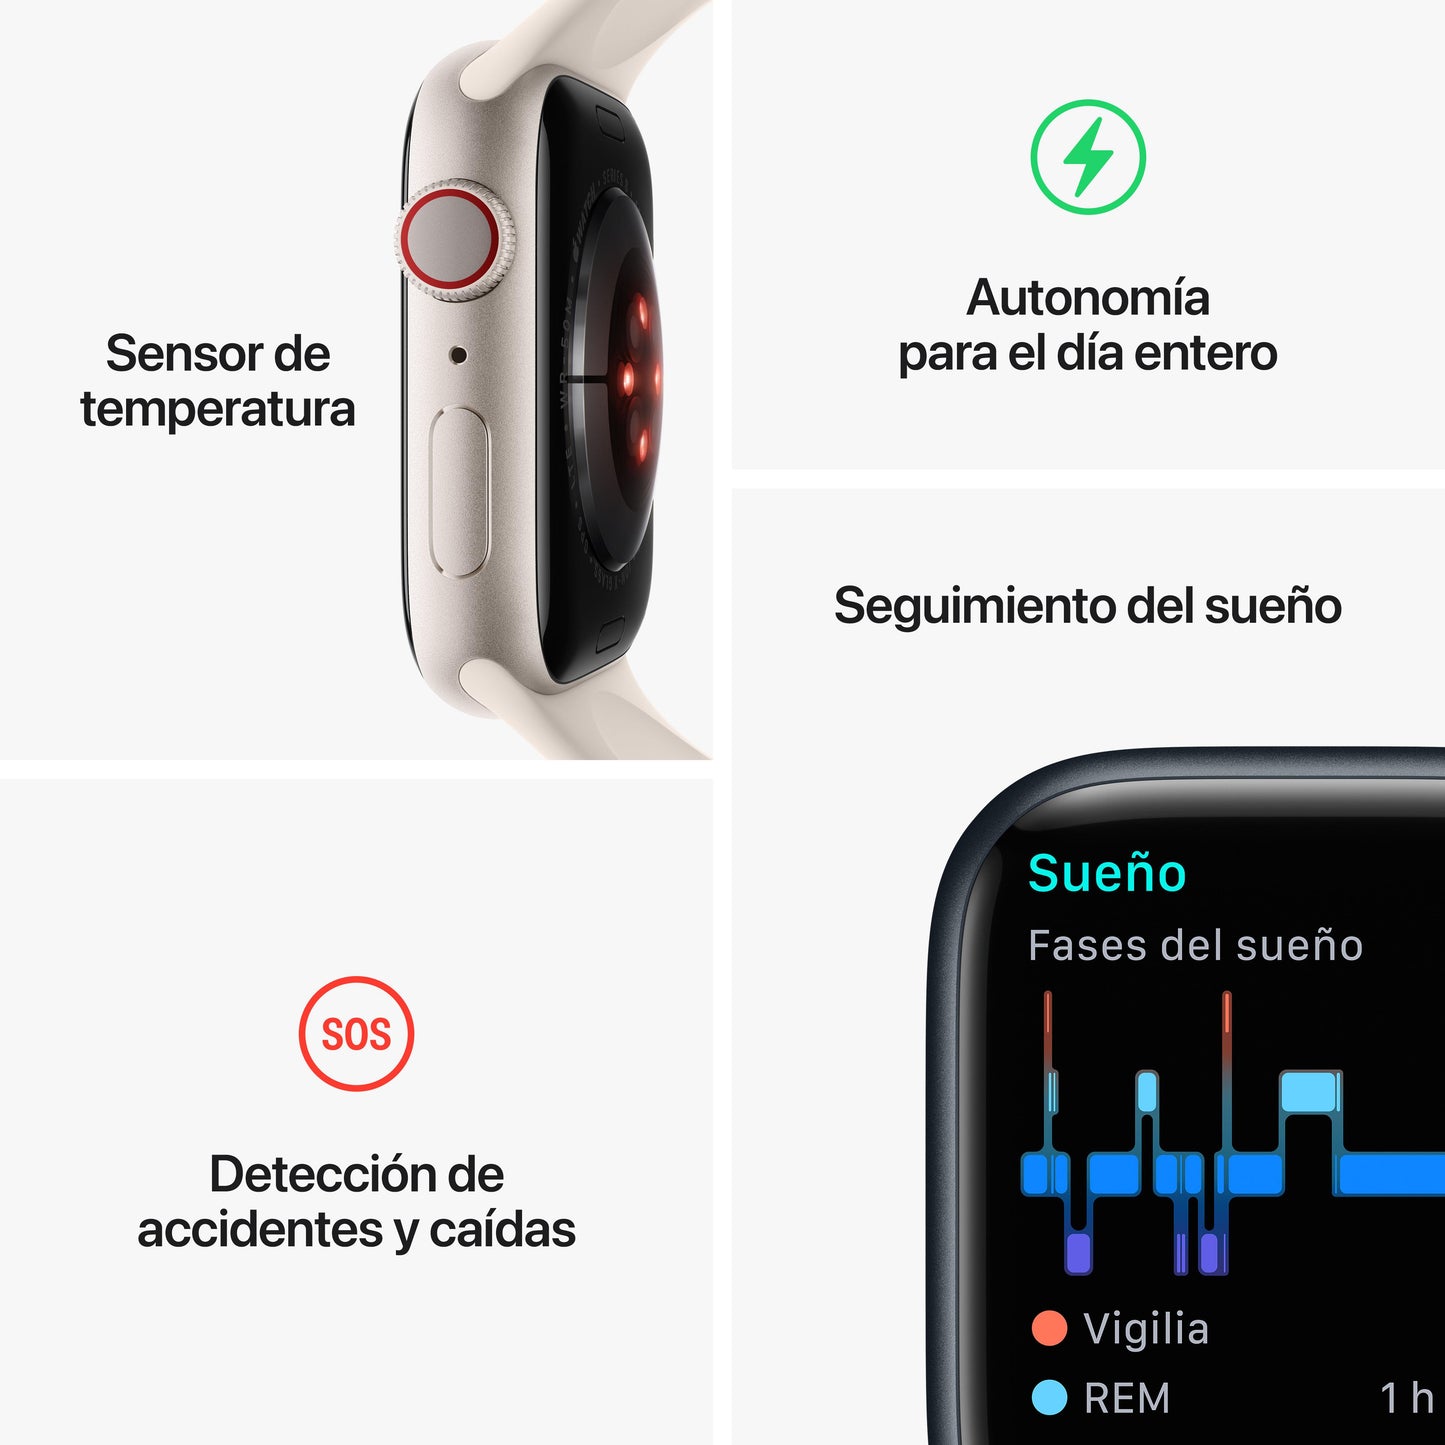 Apple Watch Series 8 (GPS + Cellular) - Caja de acero inoxidable en plata de 41 mm - Correa deportiva blanca - Talla única